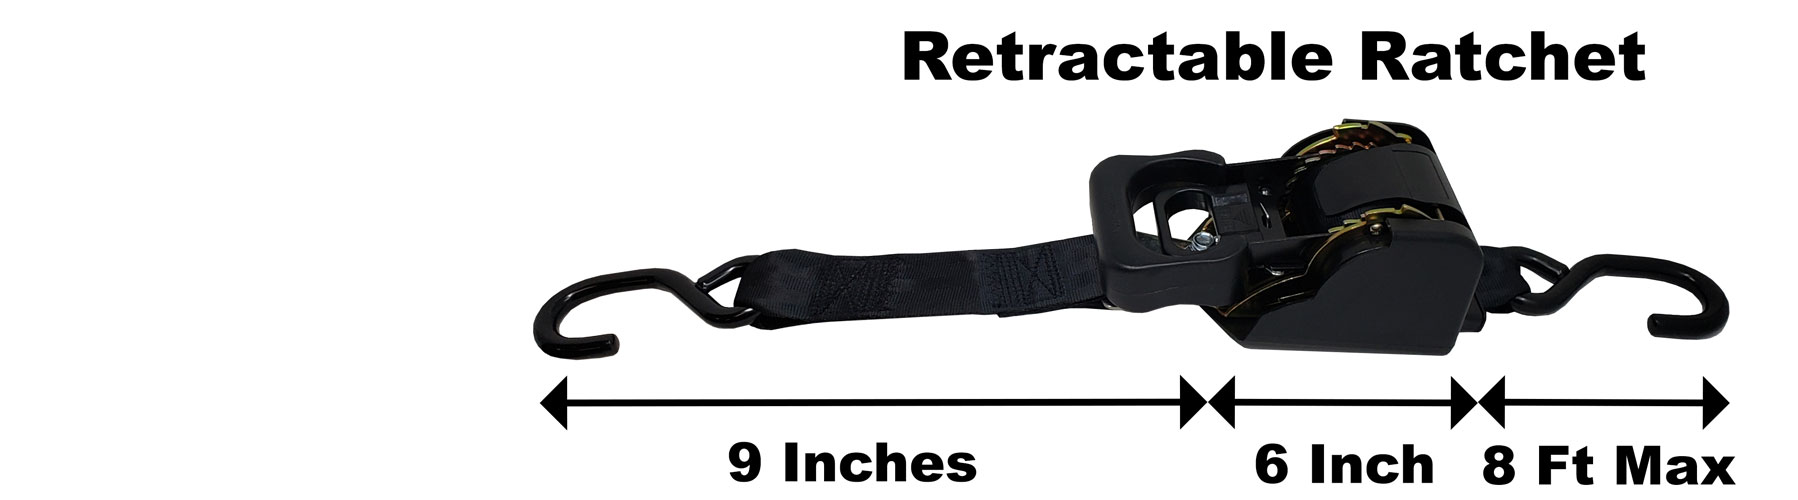 2 Inch Retractable Ratchet Straps 